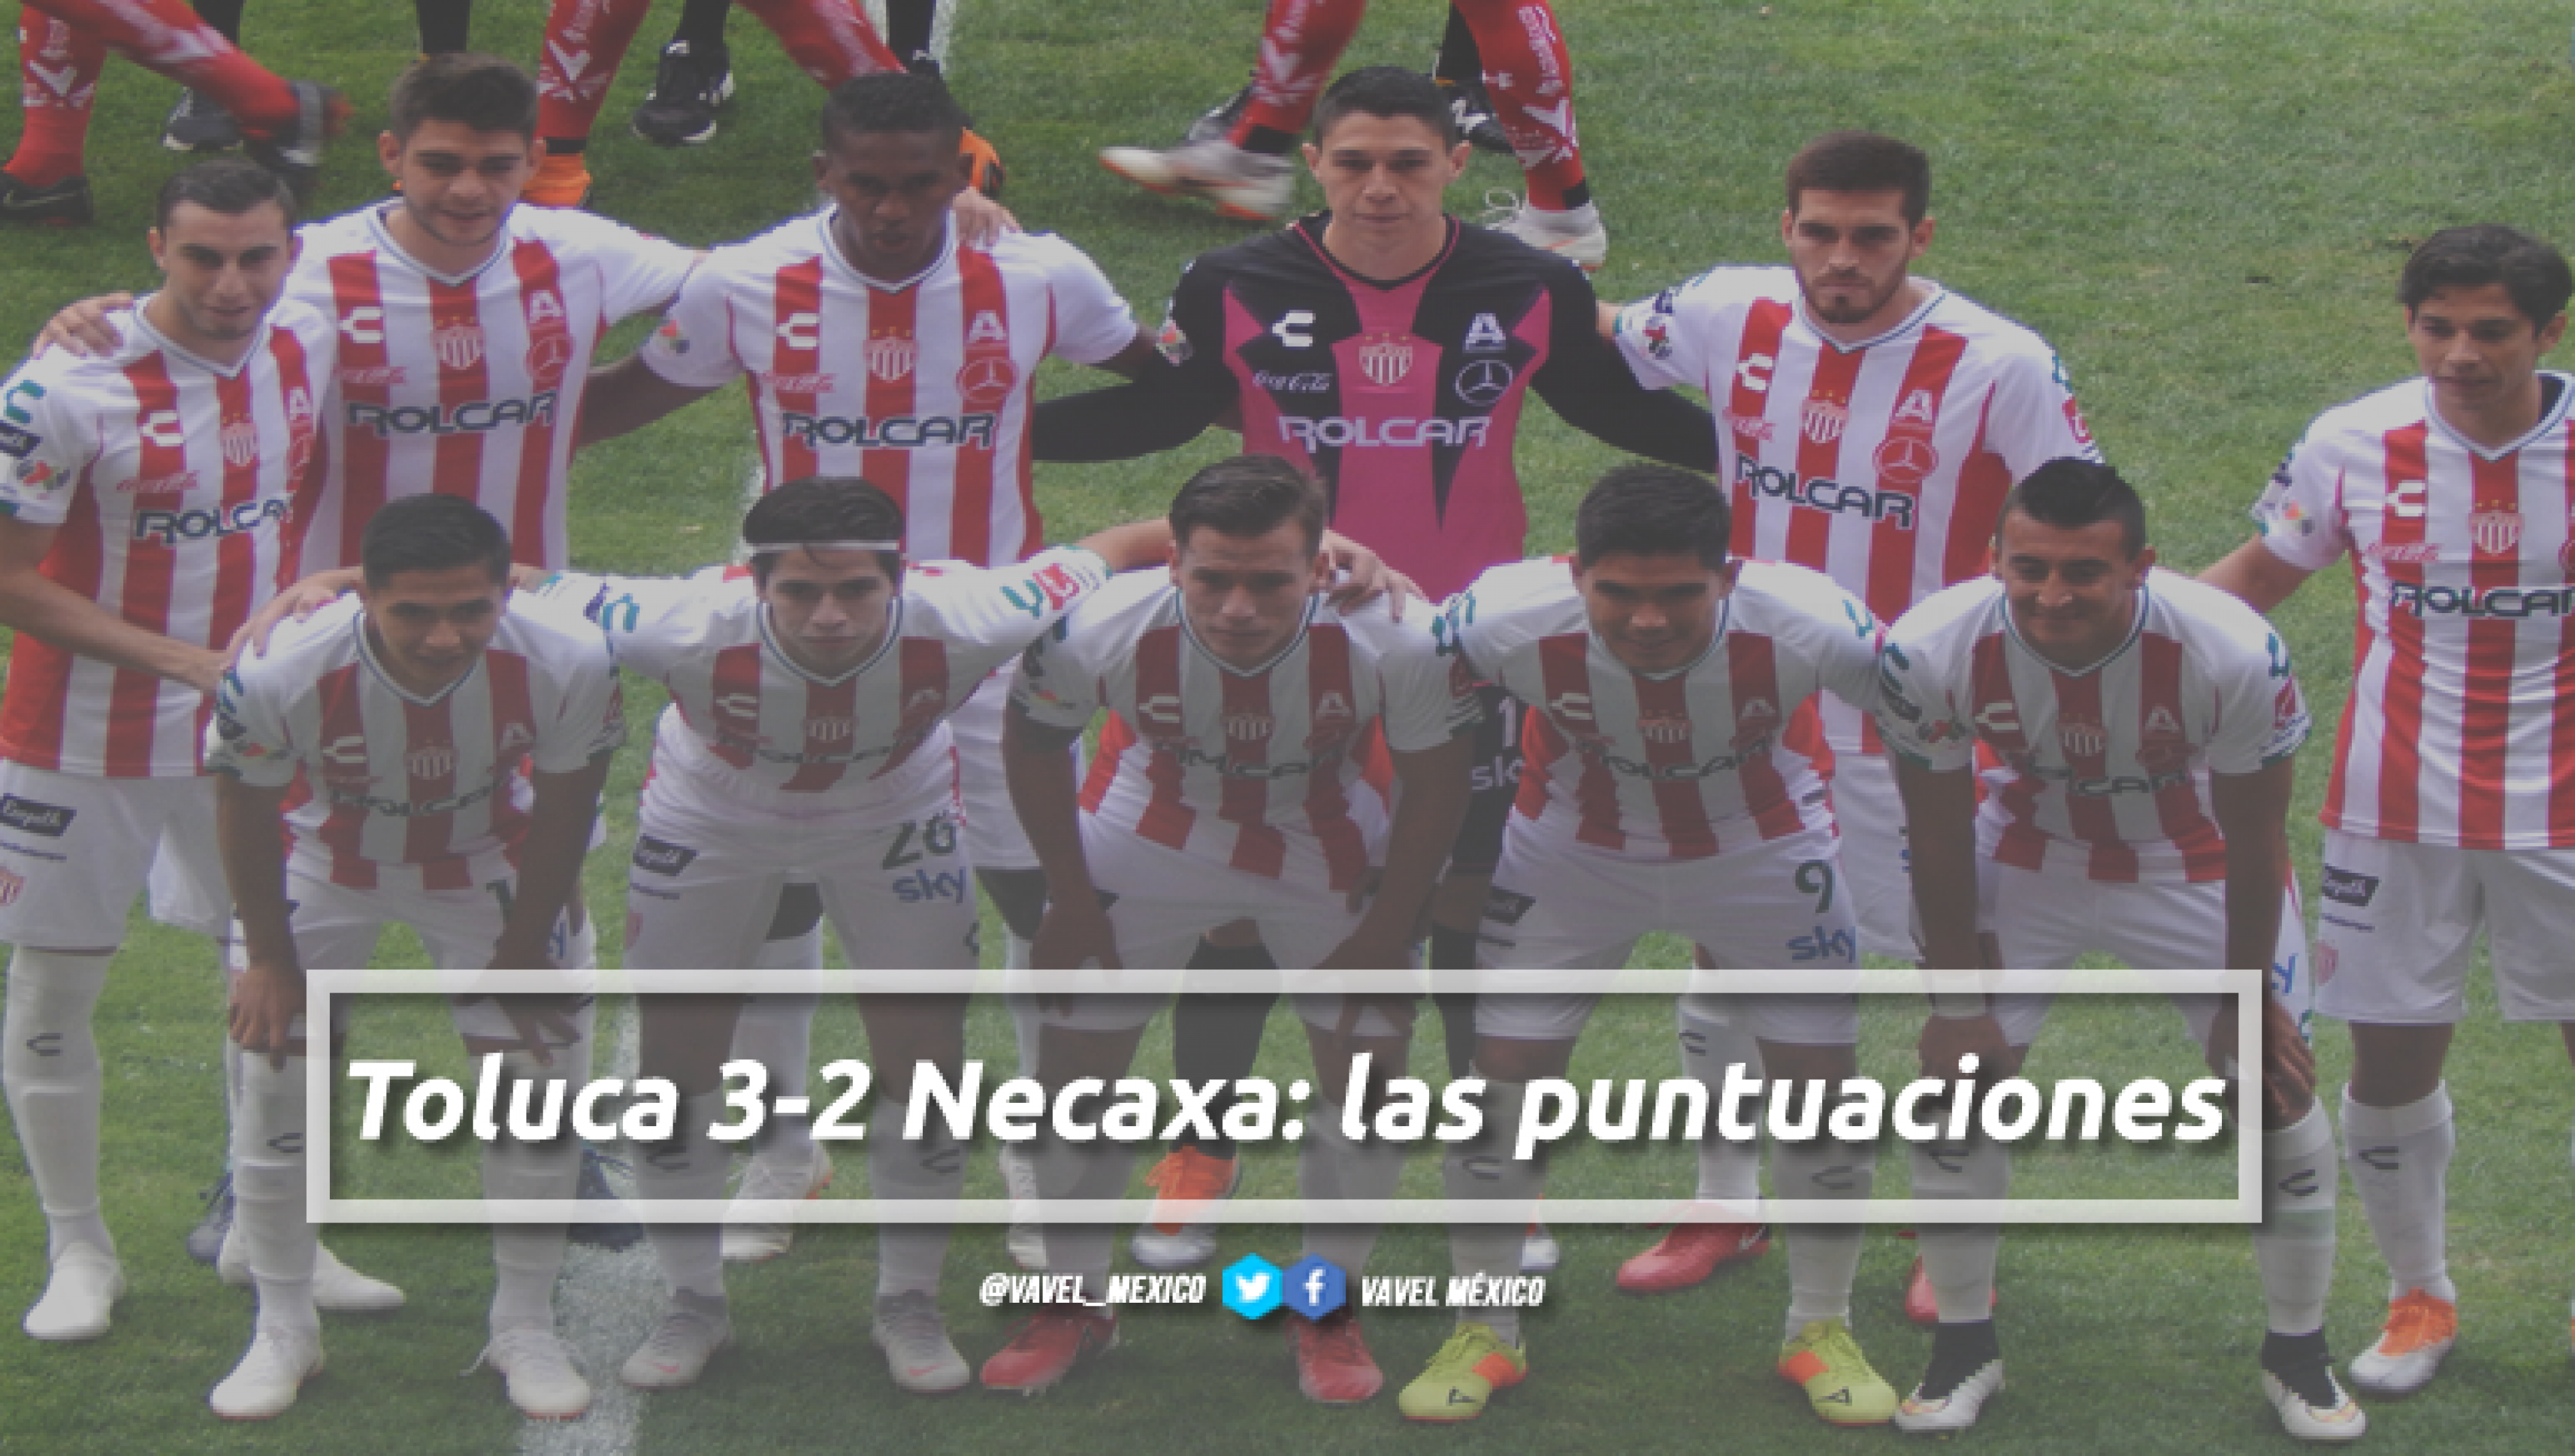 Toluca 3-2 Necaxa: puntuaciones de Necaxa en la jornada 10 de la Liga MX Apertura 2018